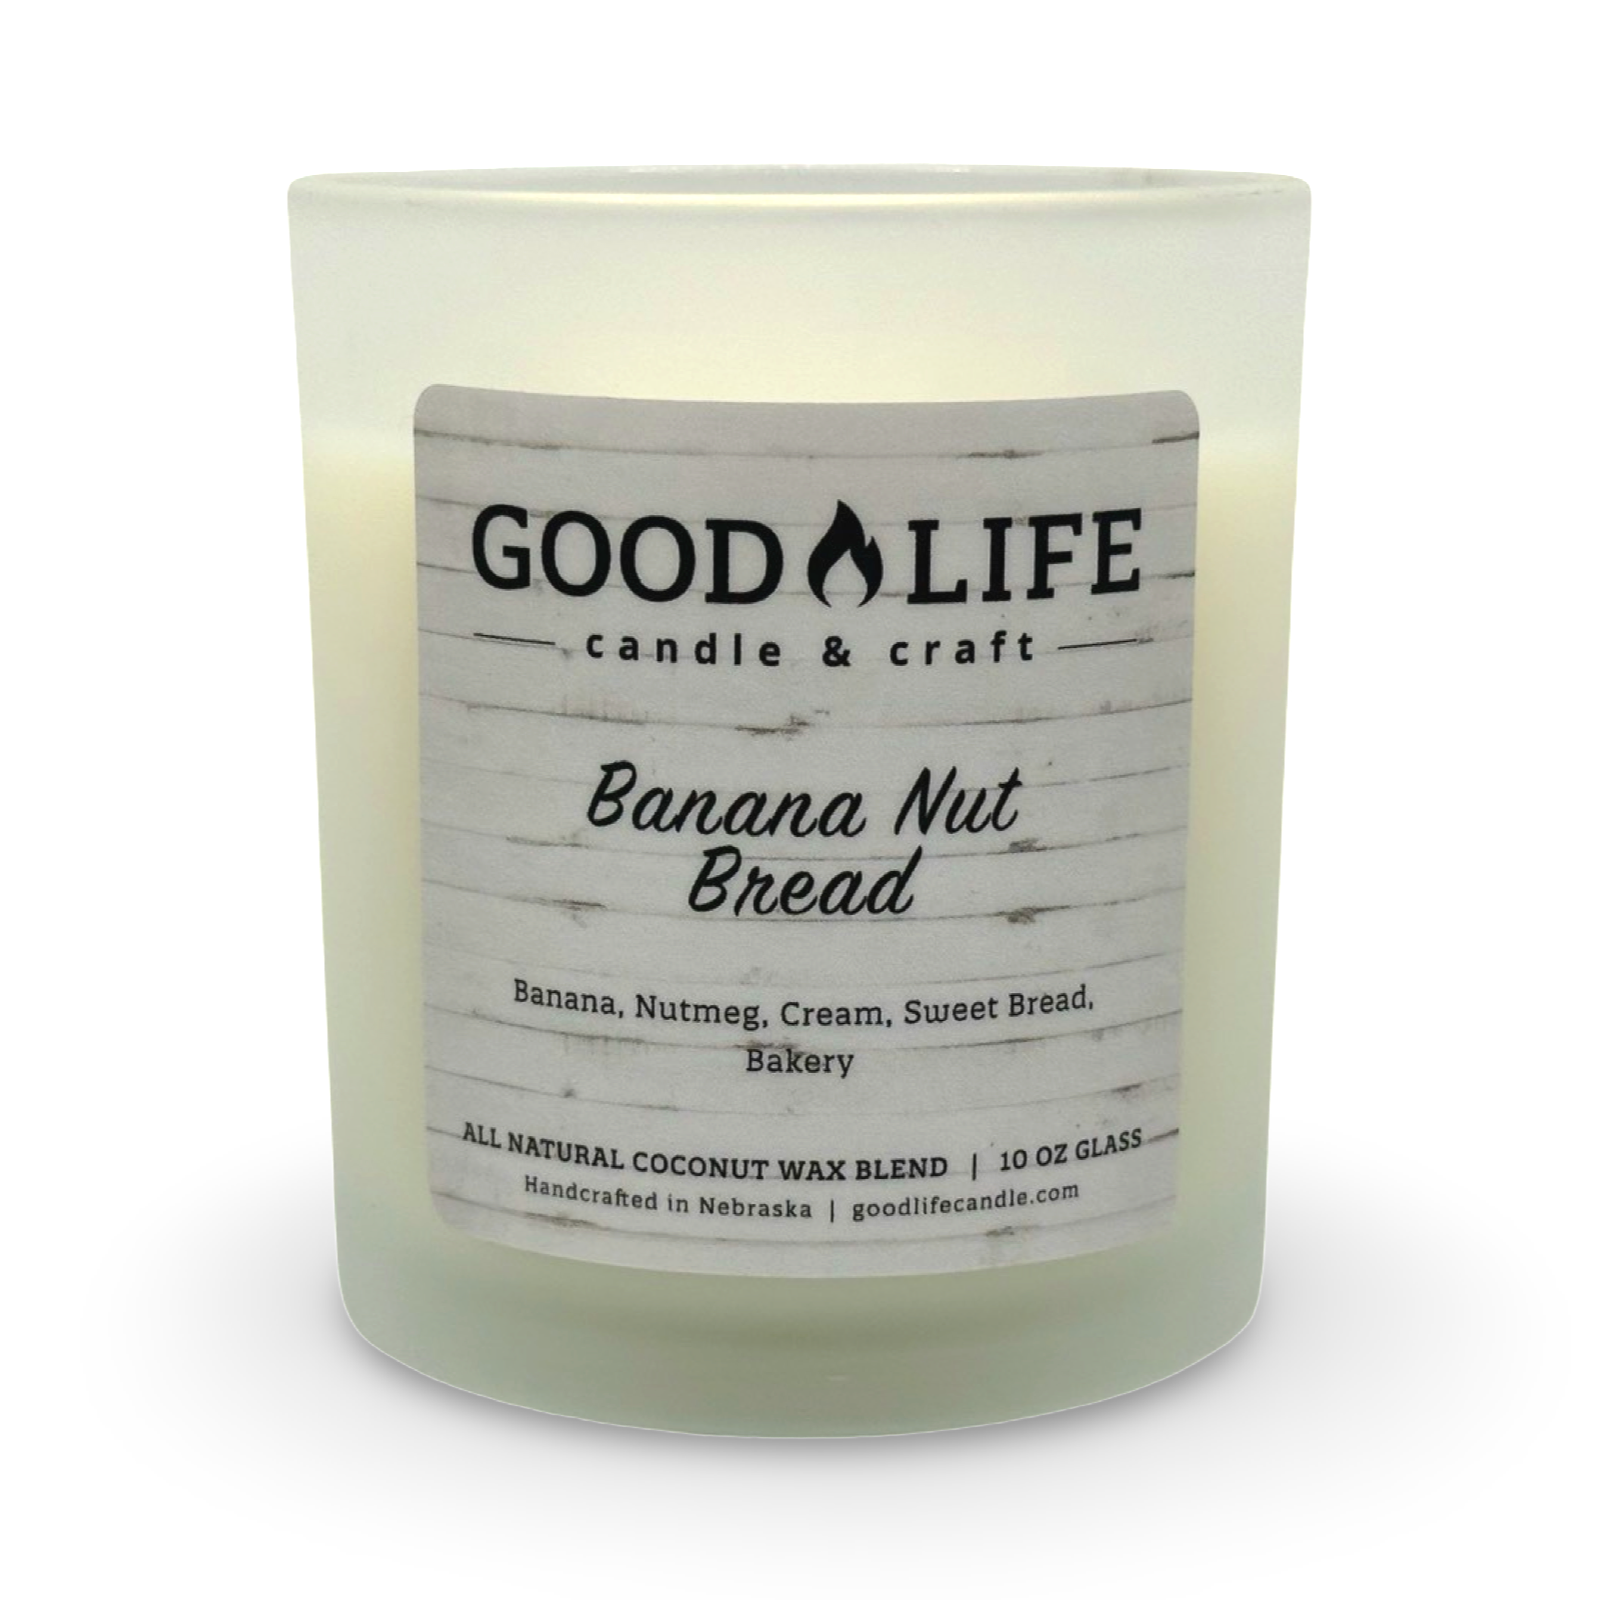 Good Life Candle & Craft Banana Nut Bread 10 oz 4